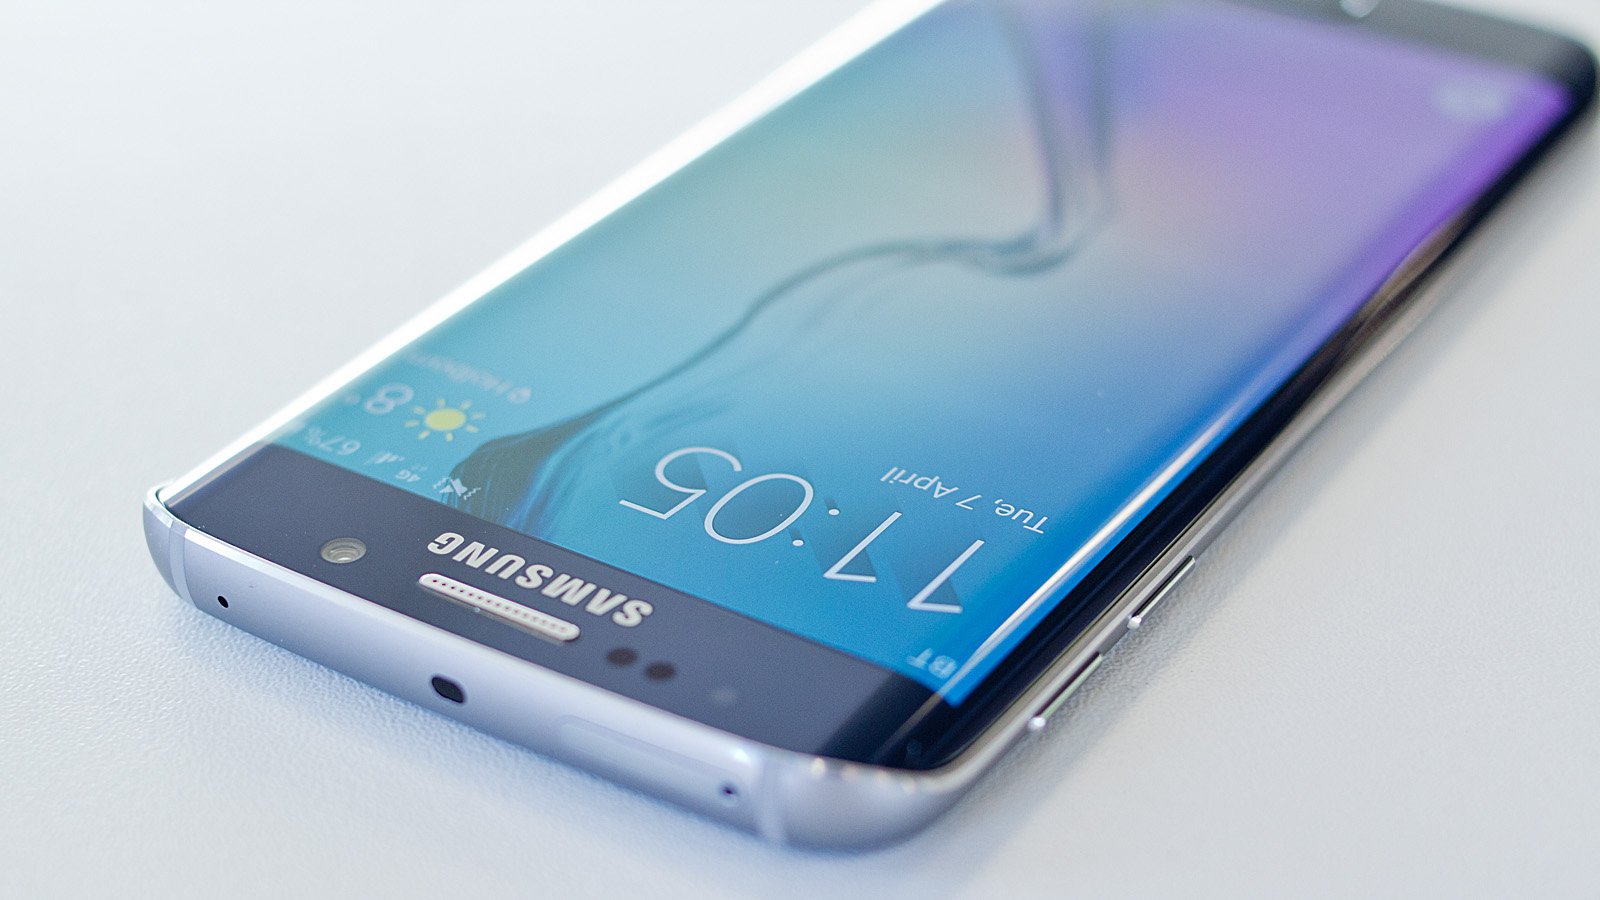 Samsung Galaxy S7 ar putea fi mai ieftin